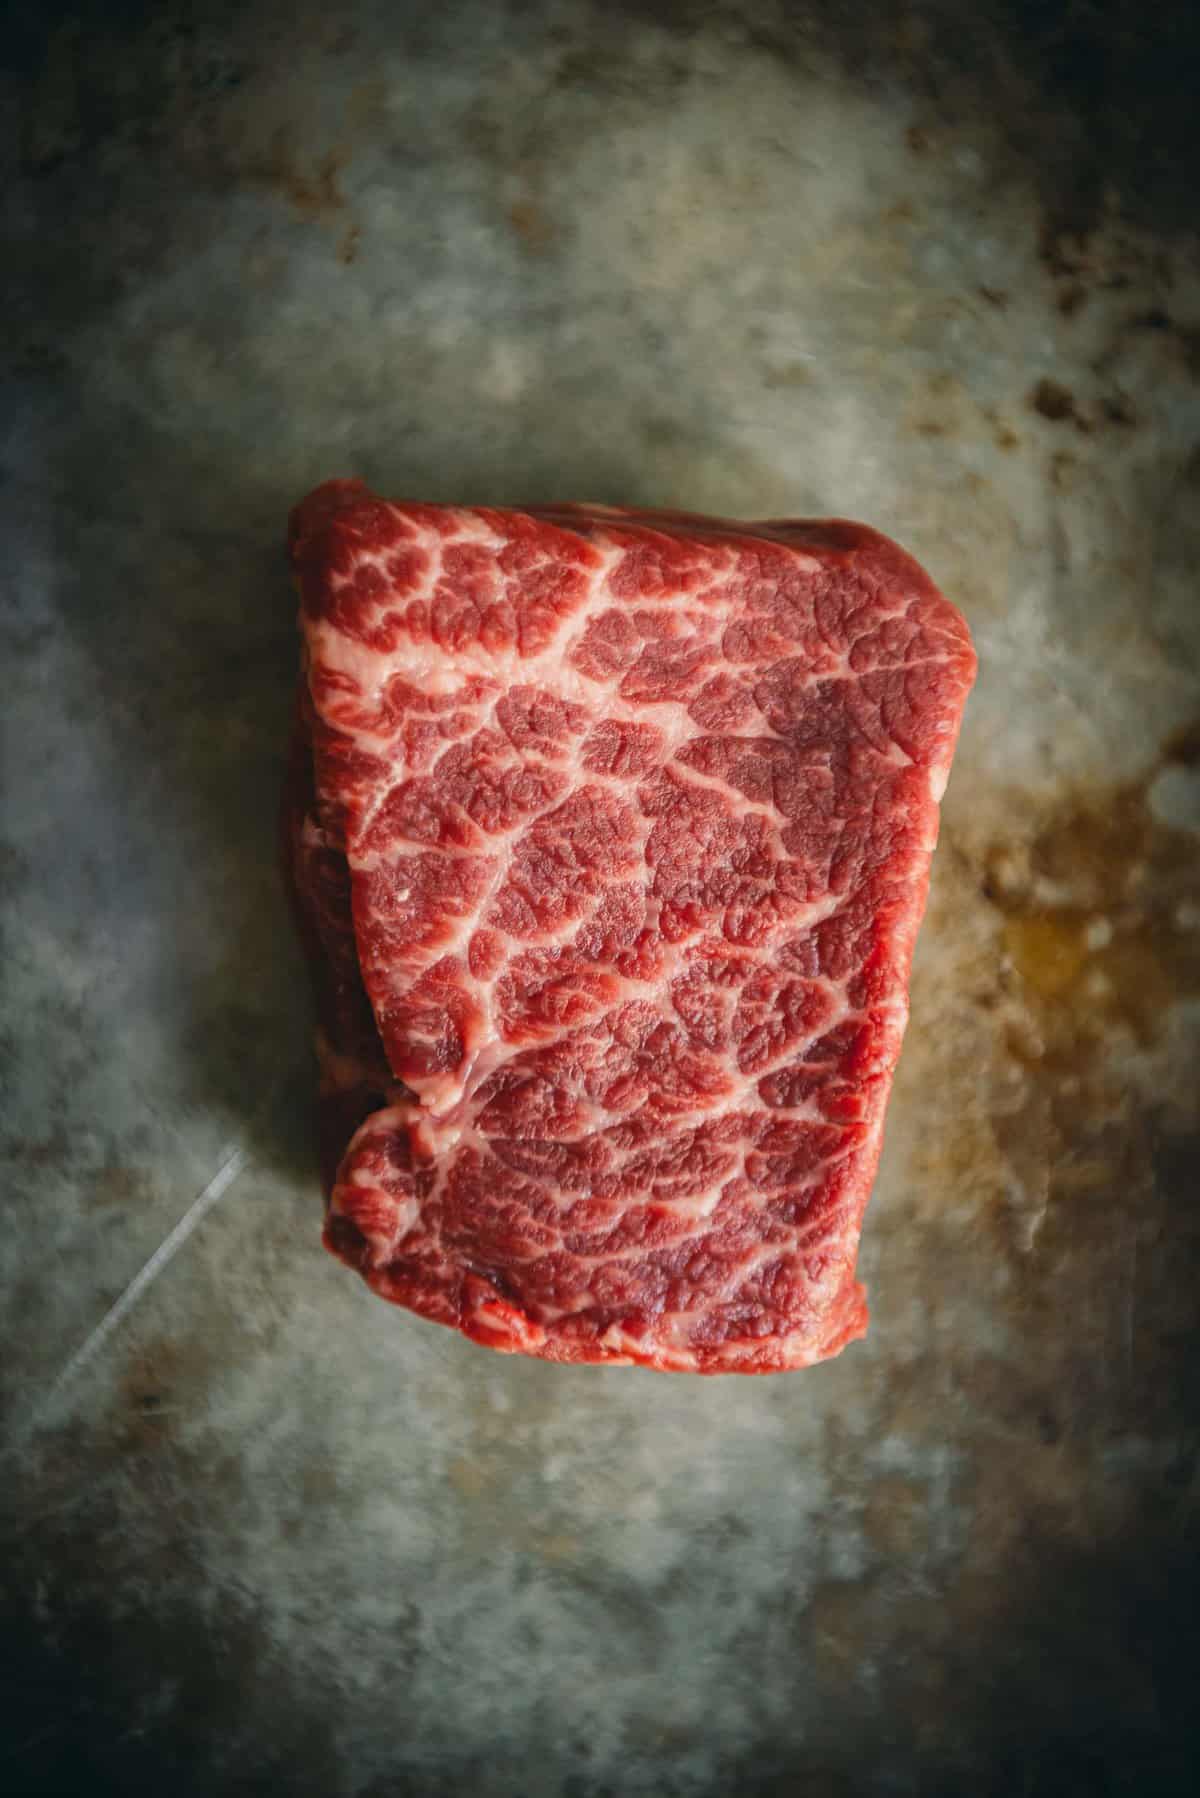 Raw petite denver steak showing white marbling running through the thick steak.